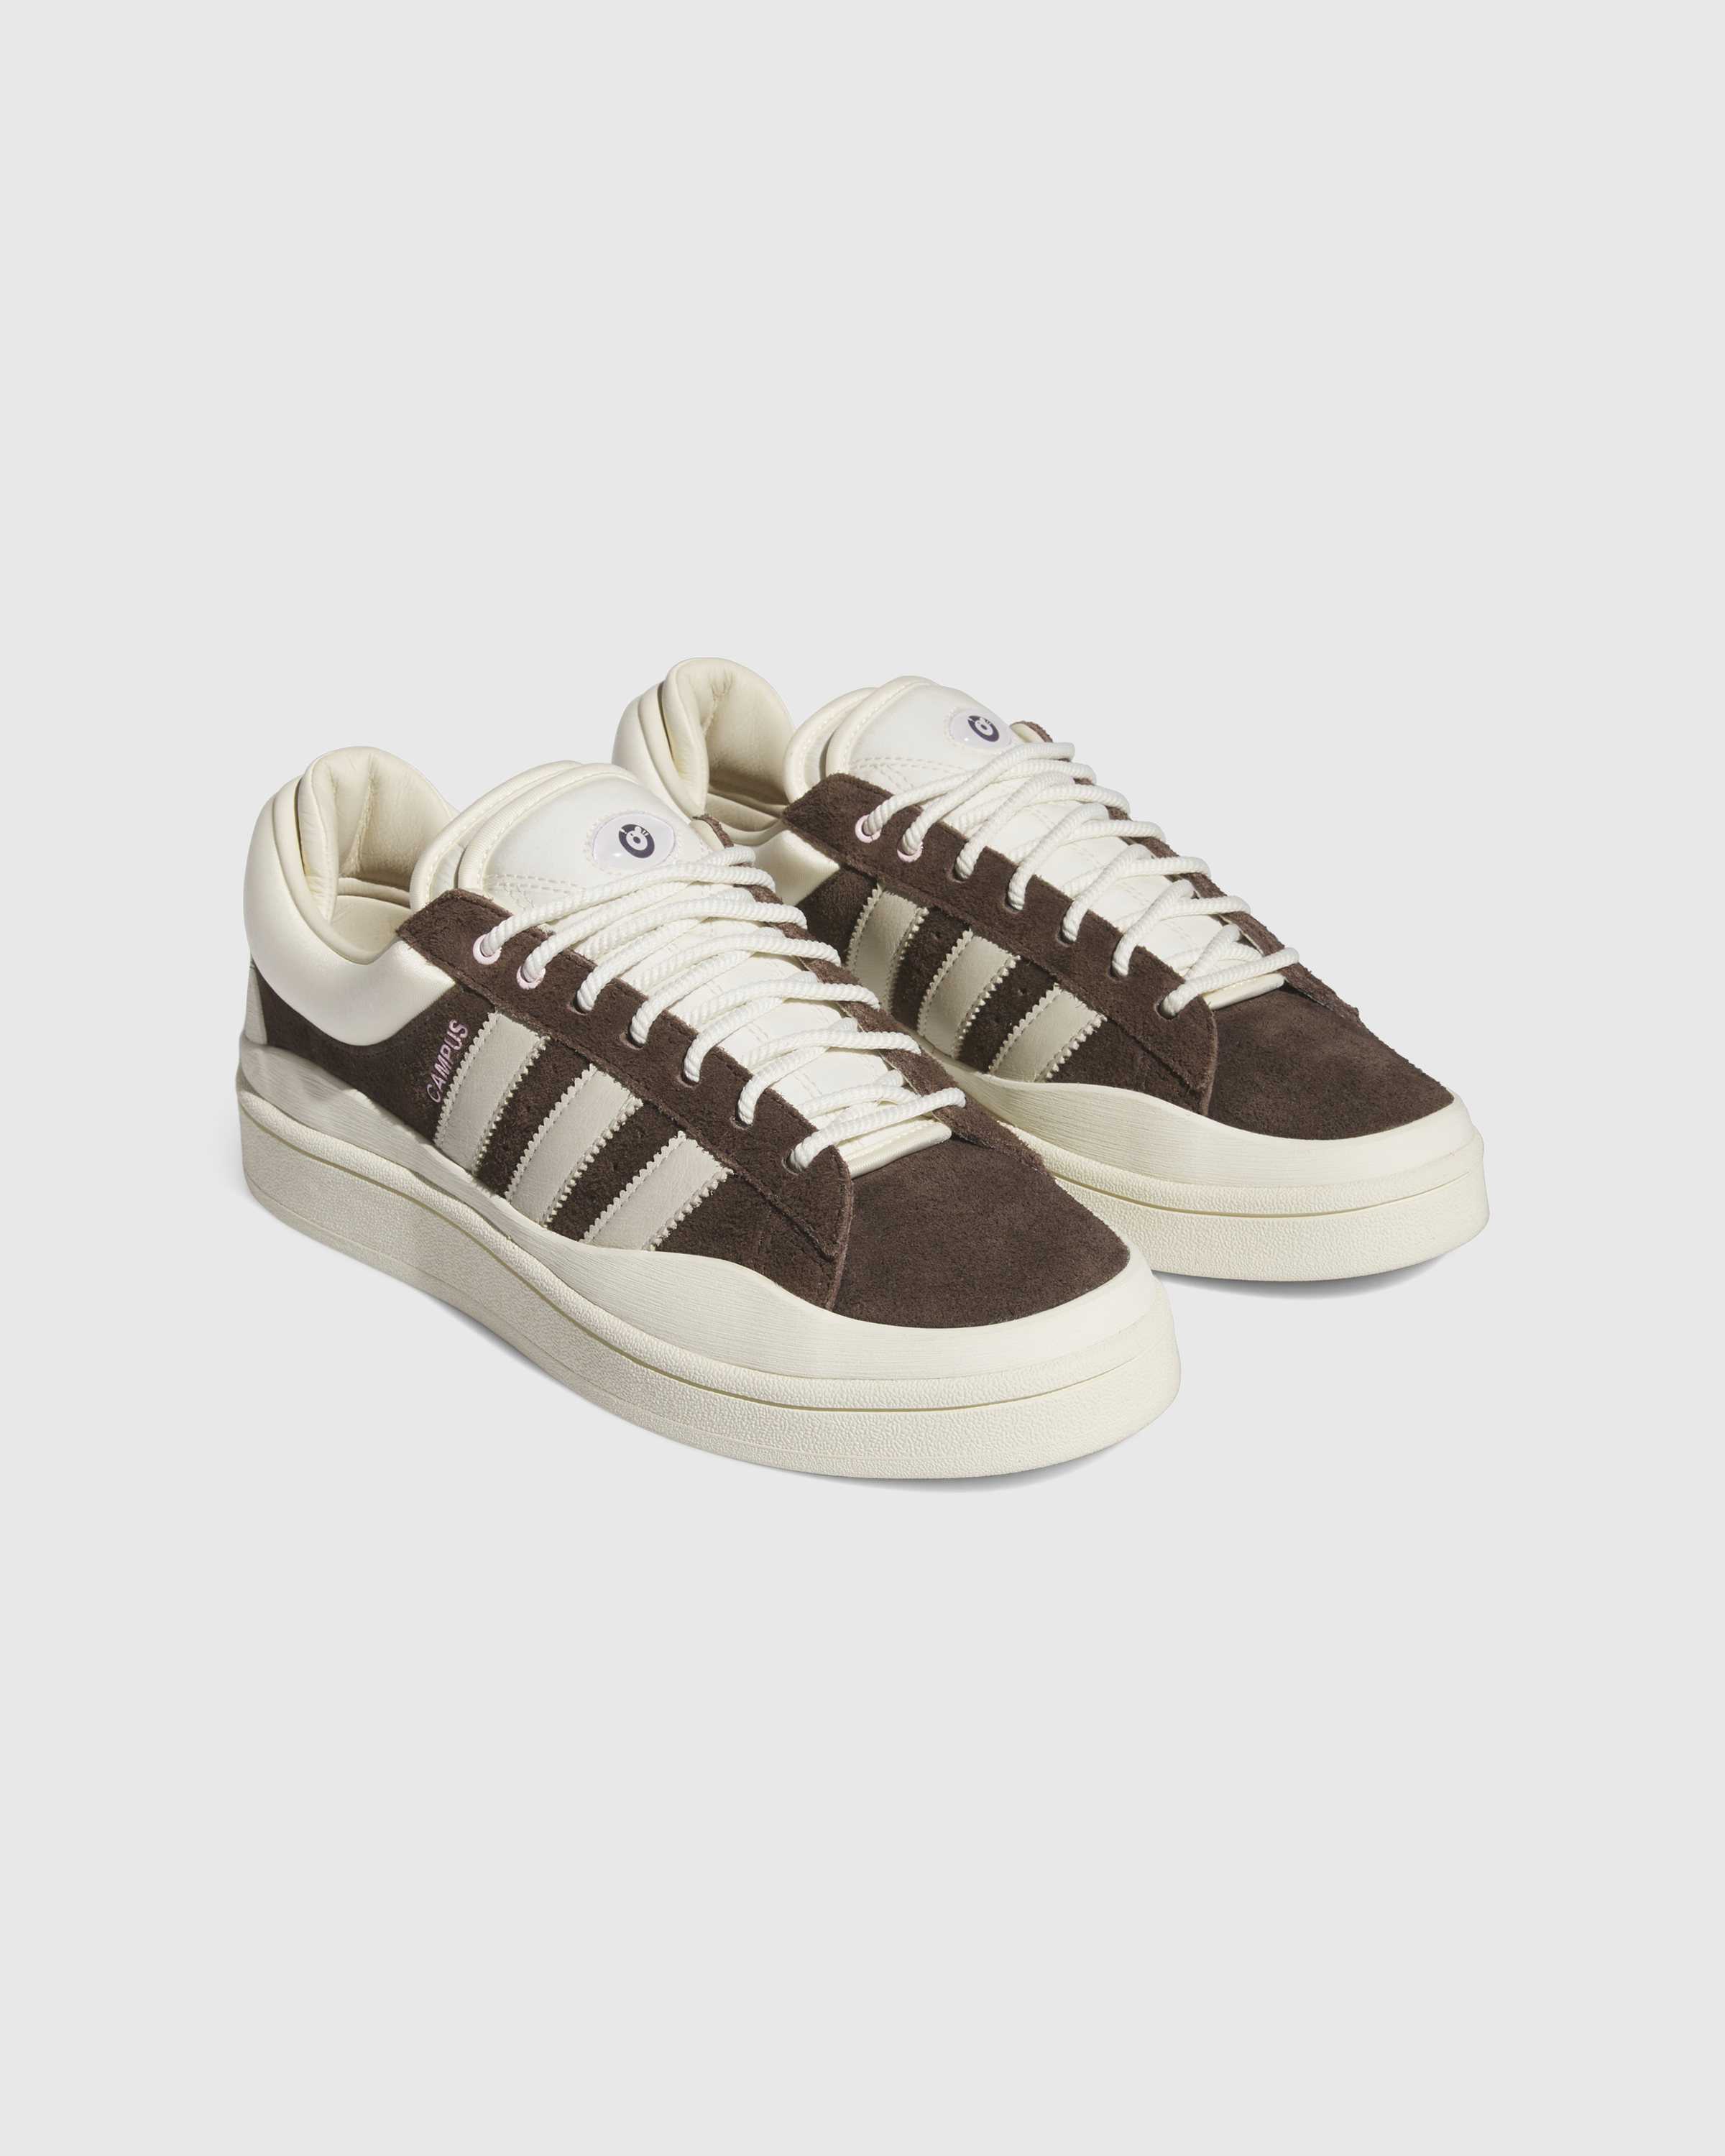 Adidas – Bad Bunny Campus Dark Brown - Sneakers - Brown - Image 3